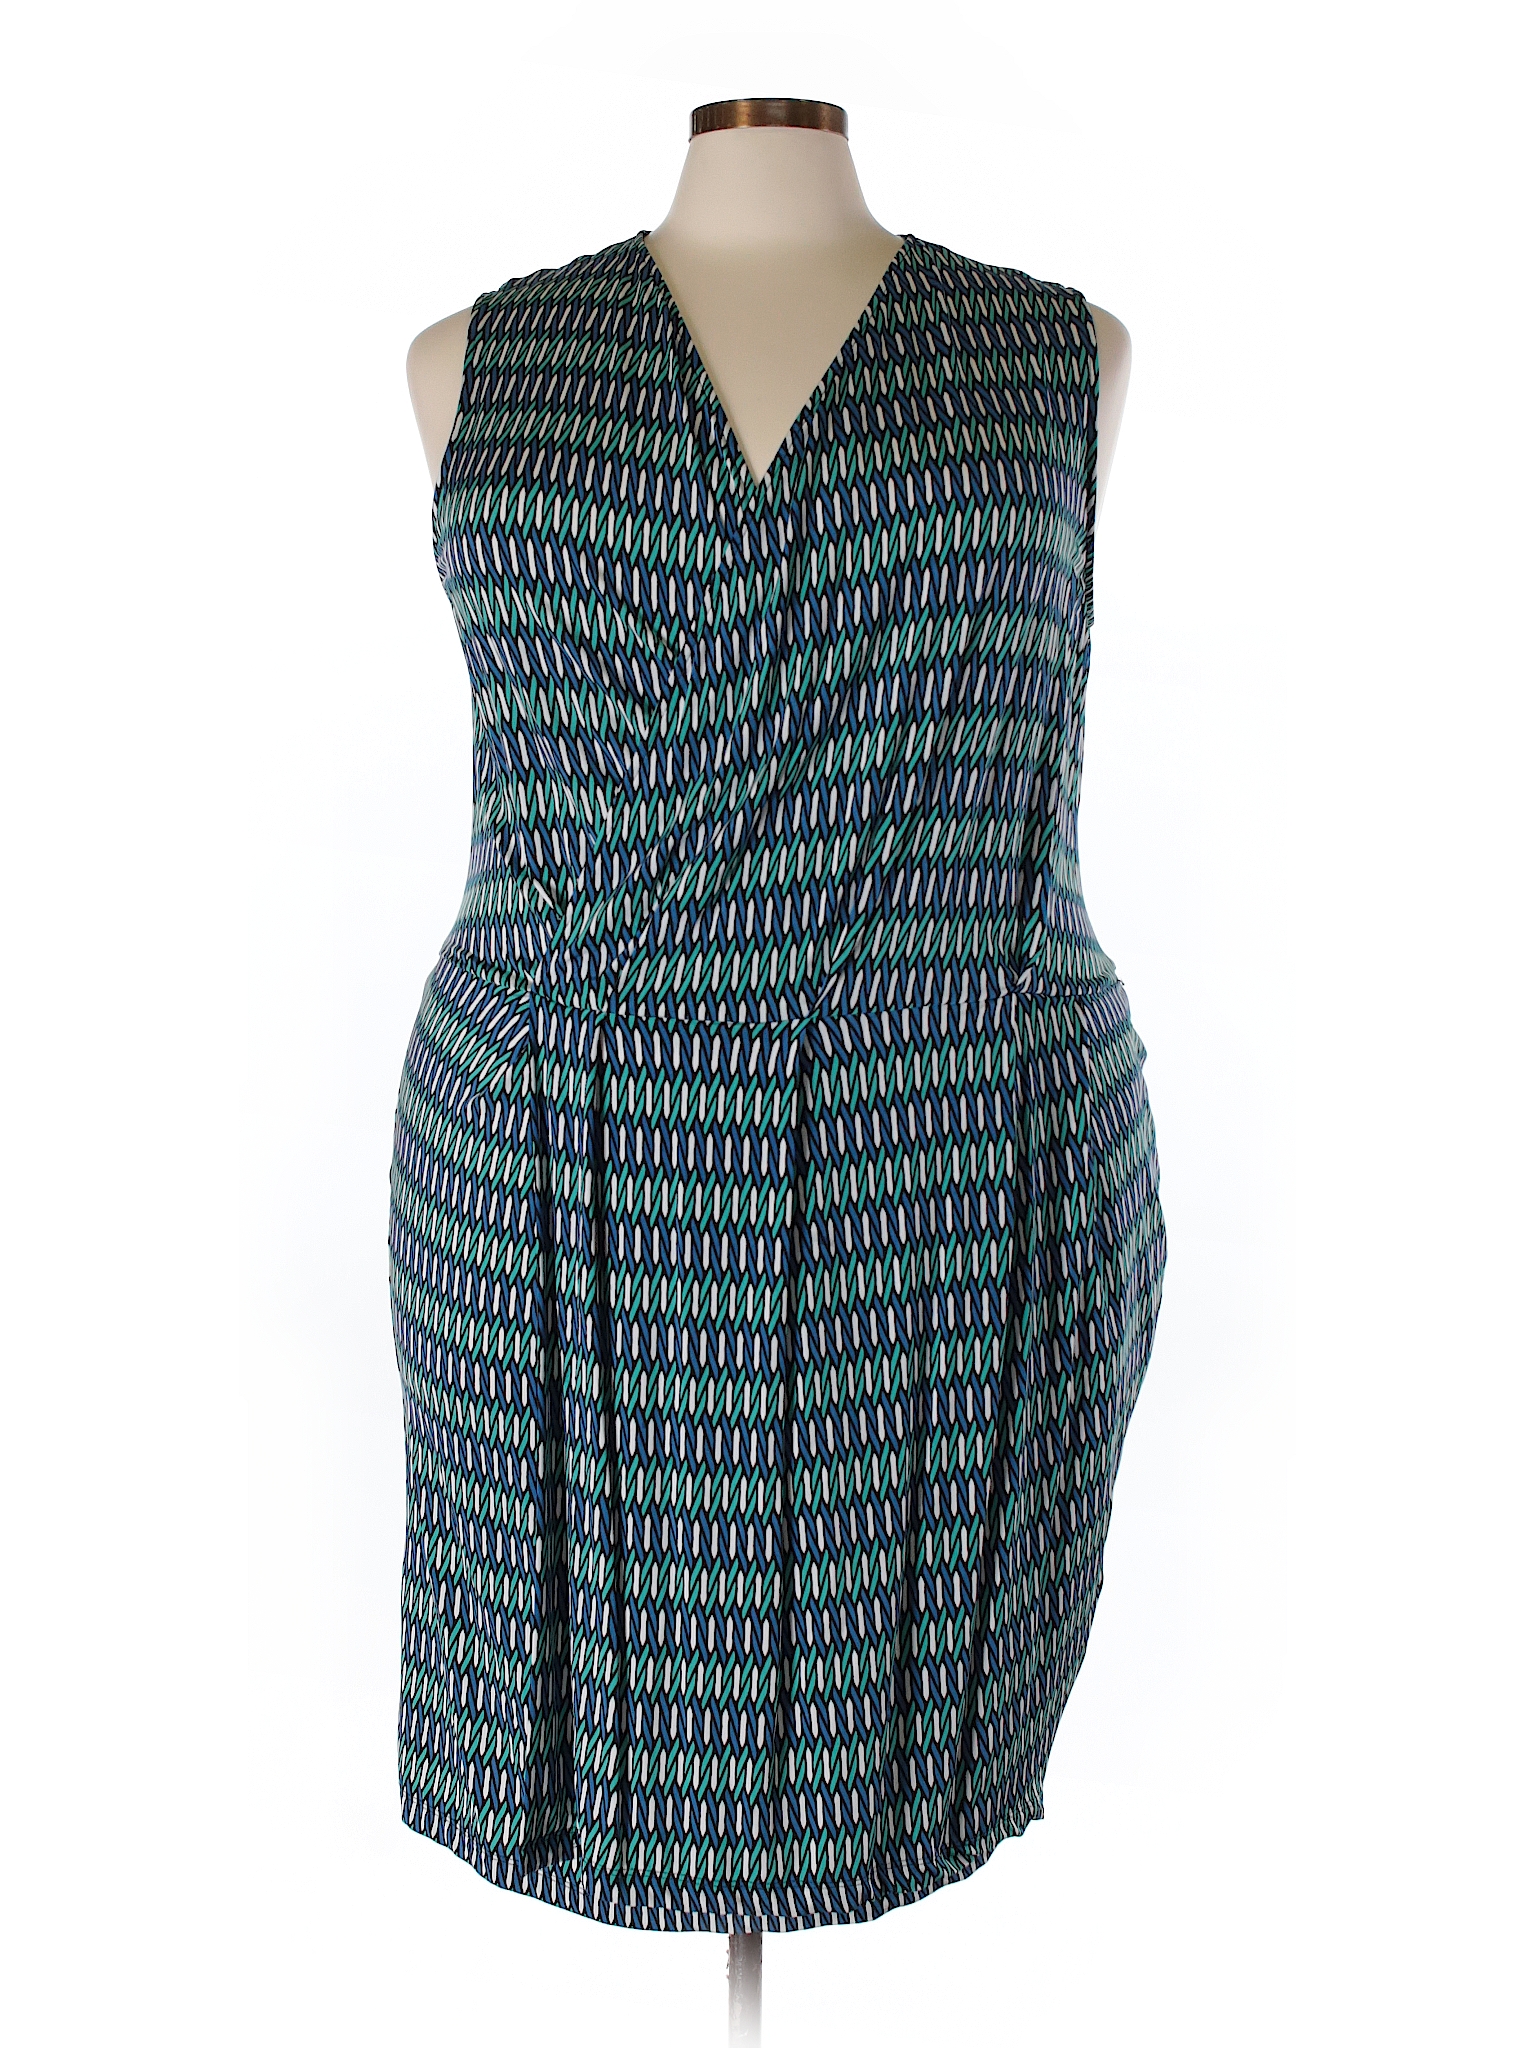 Leota Print Blue Casual Dress Size 20 Plus (2L) (Plus) - 75% off | thredUP